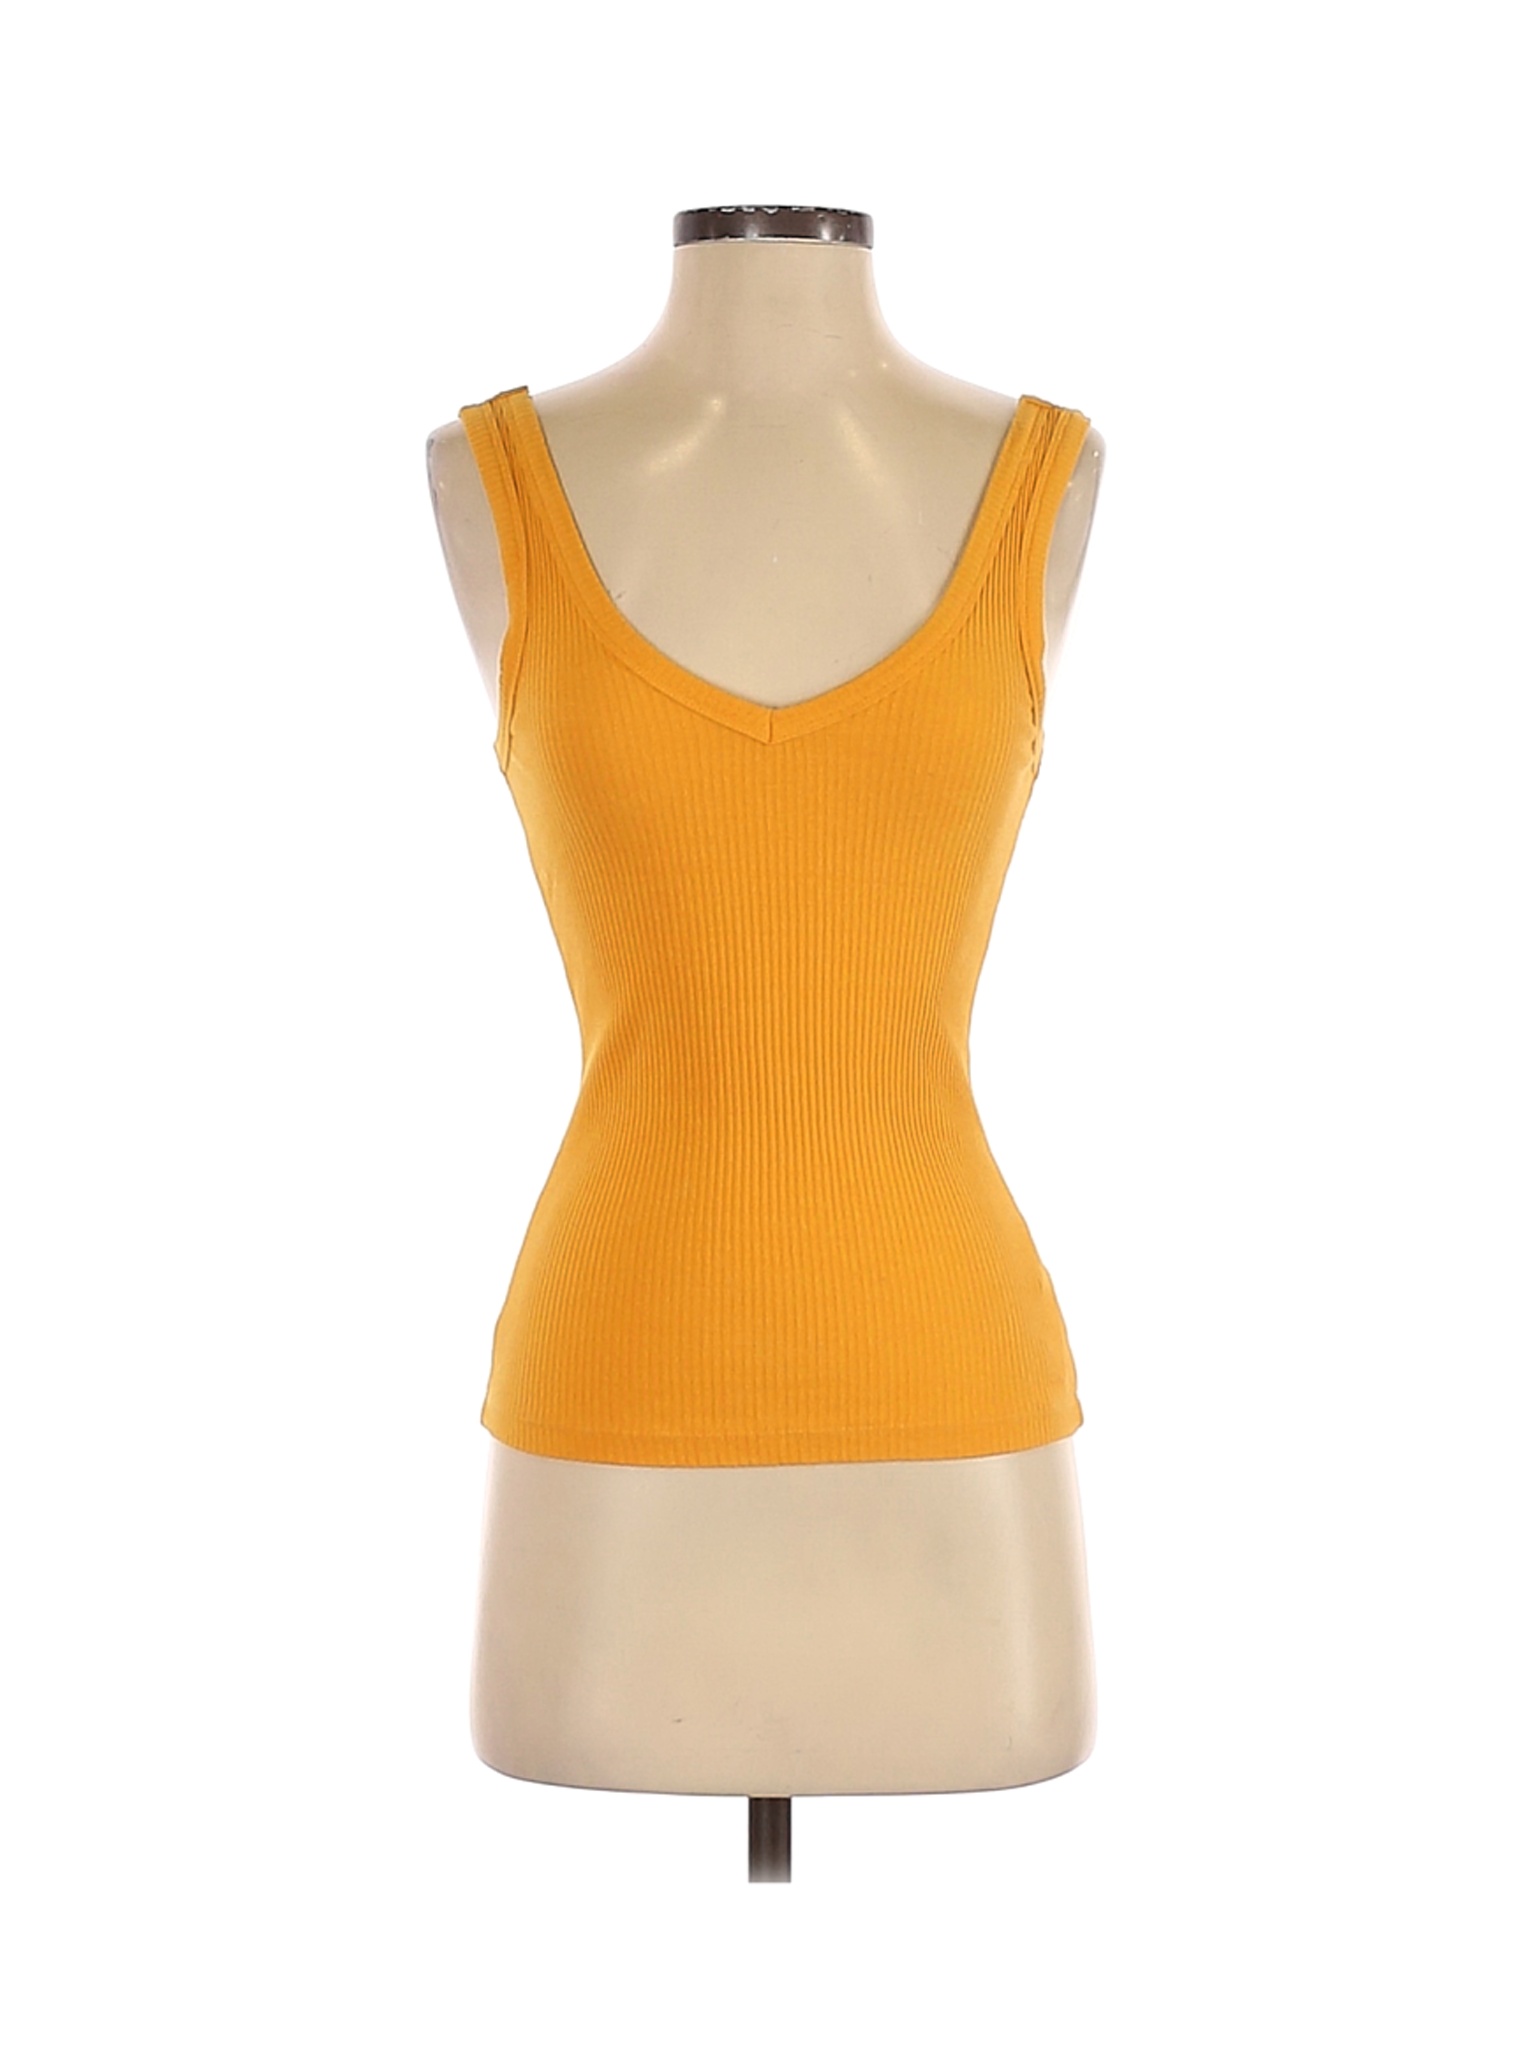 Cotton On Women Yellow Tank Top M | eBay